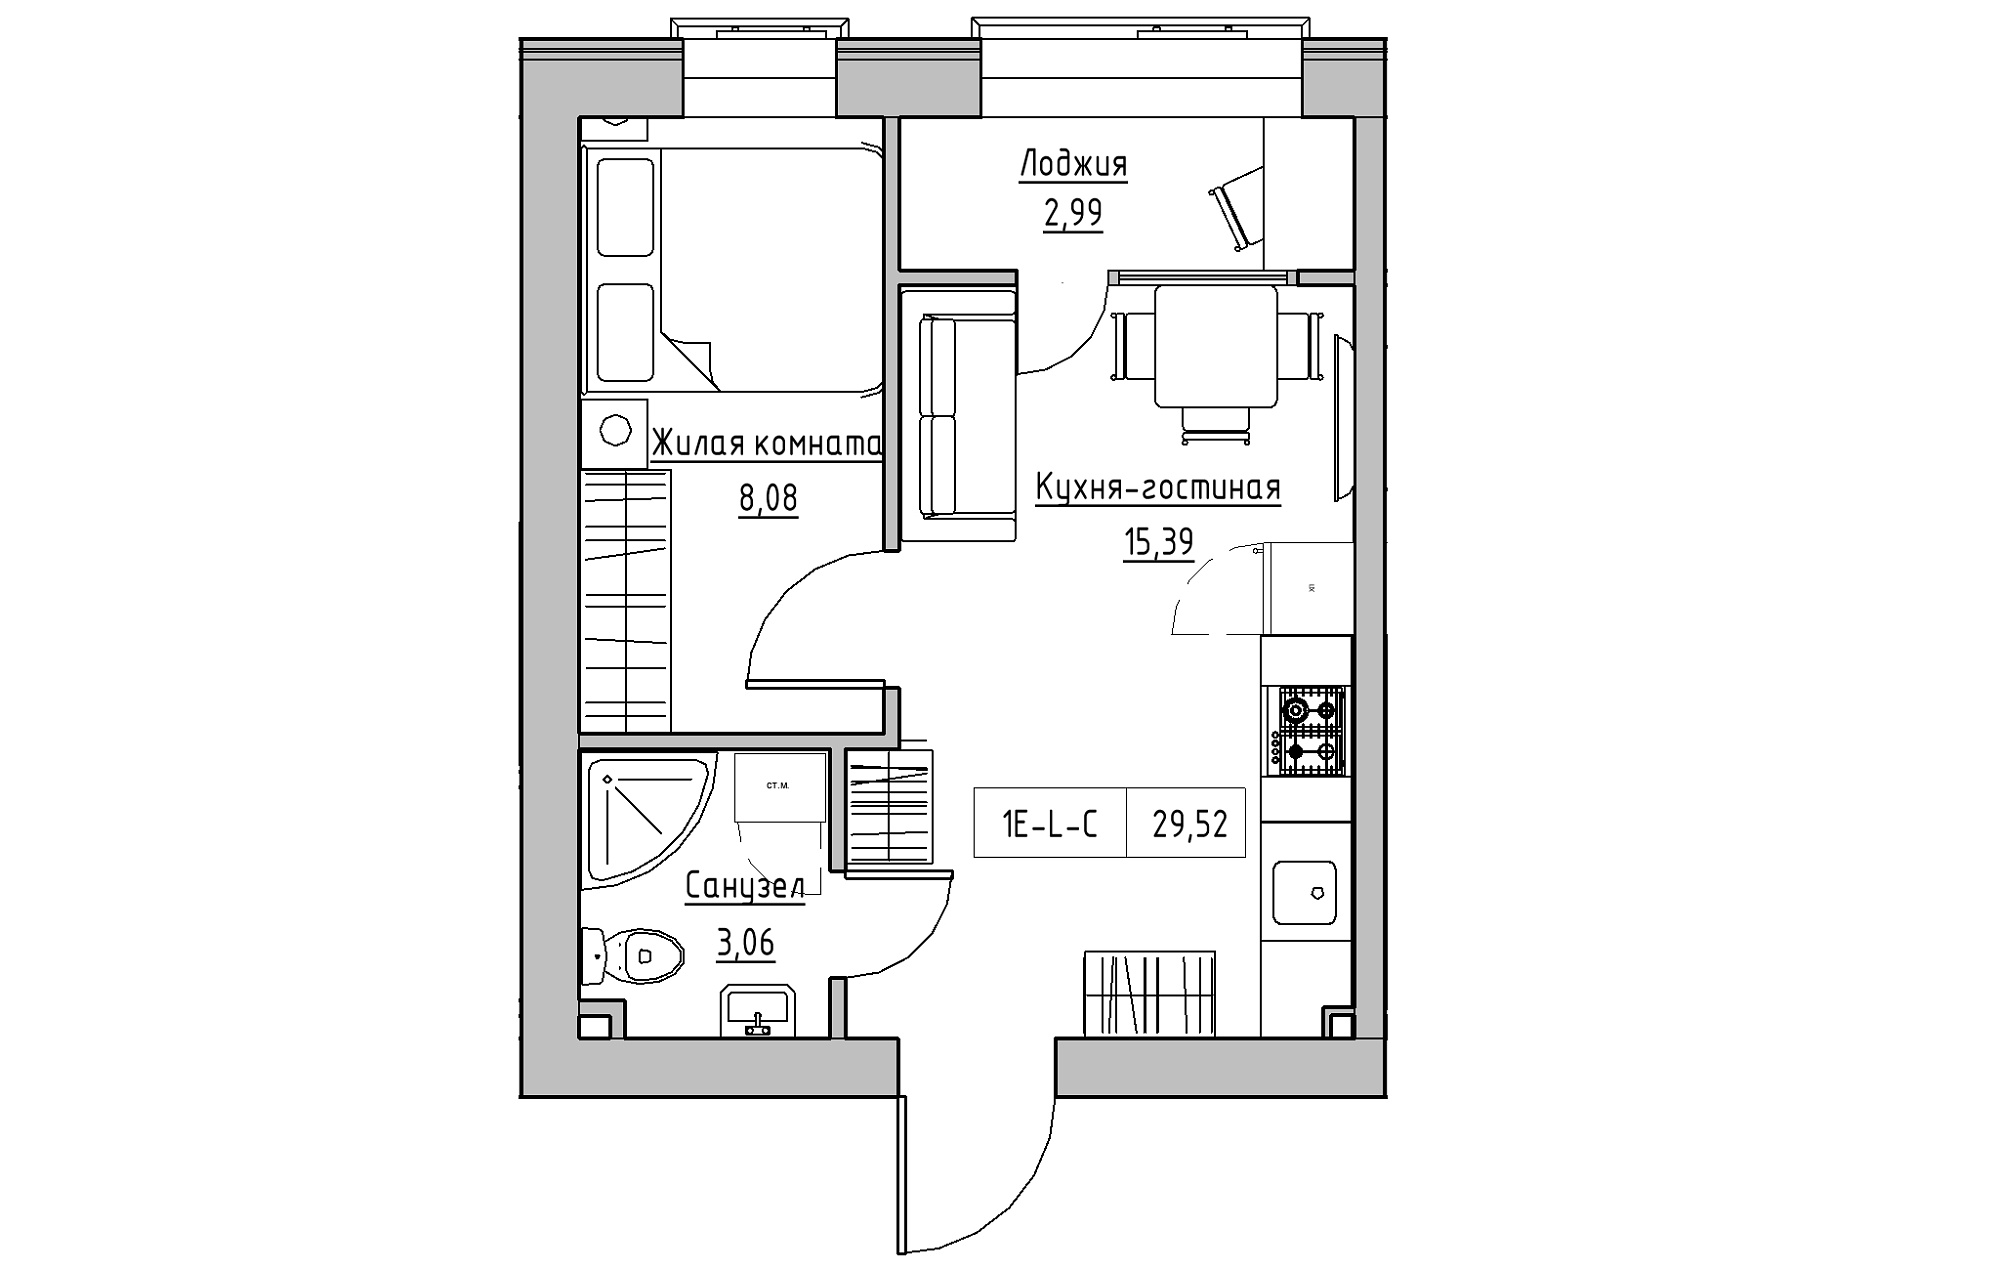 Planning 1-rm flats area 29.52m2, KS-018-04/0006.